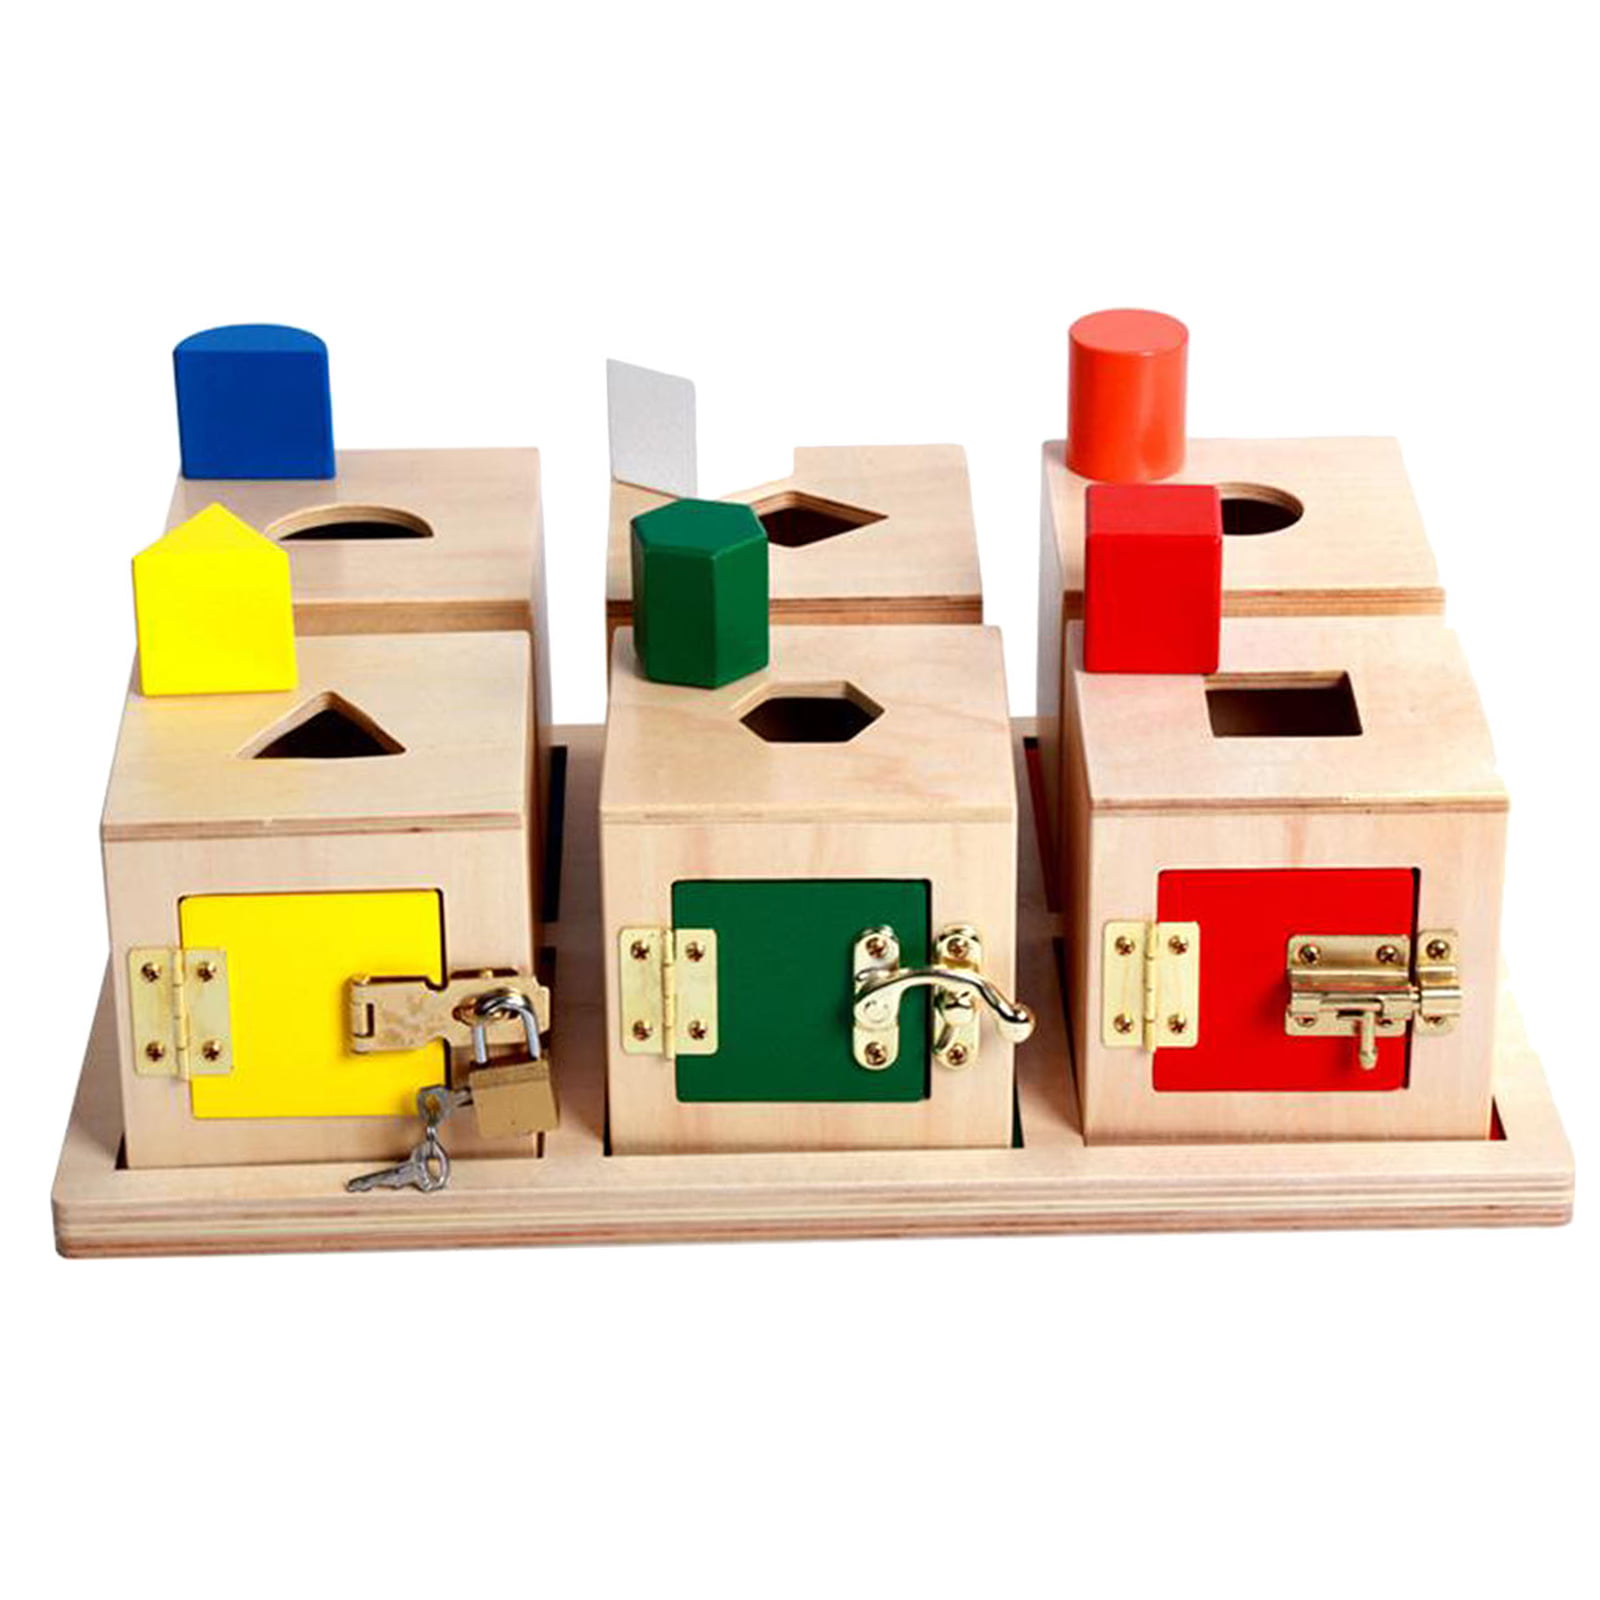 Locking Box & Cheese Maze Montessori Materials Kids Wooden Educational Toy